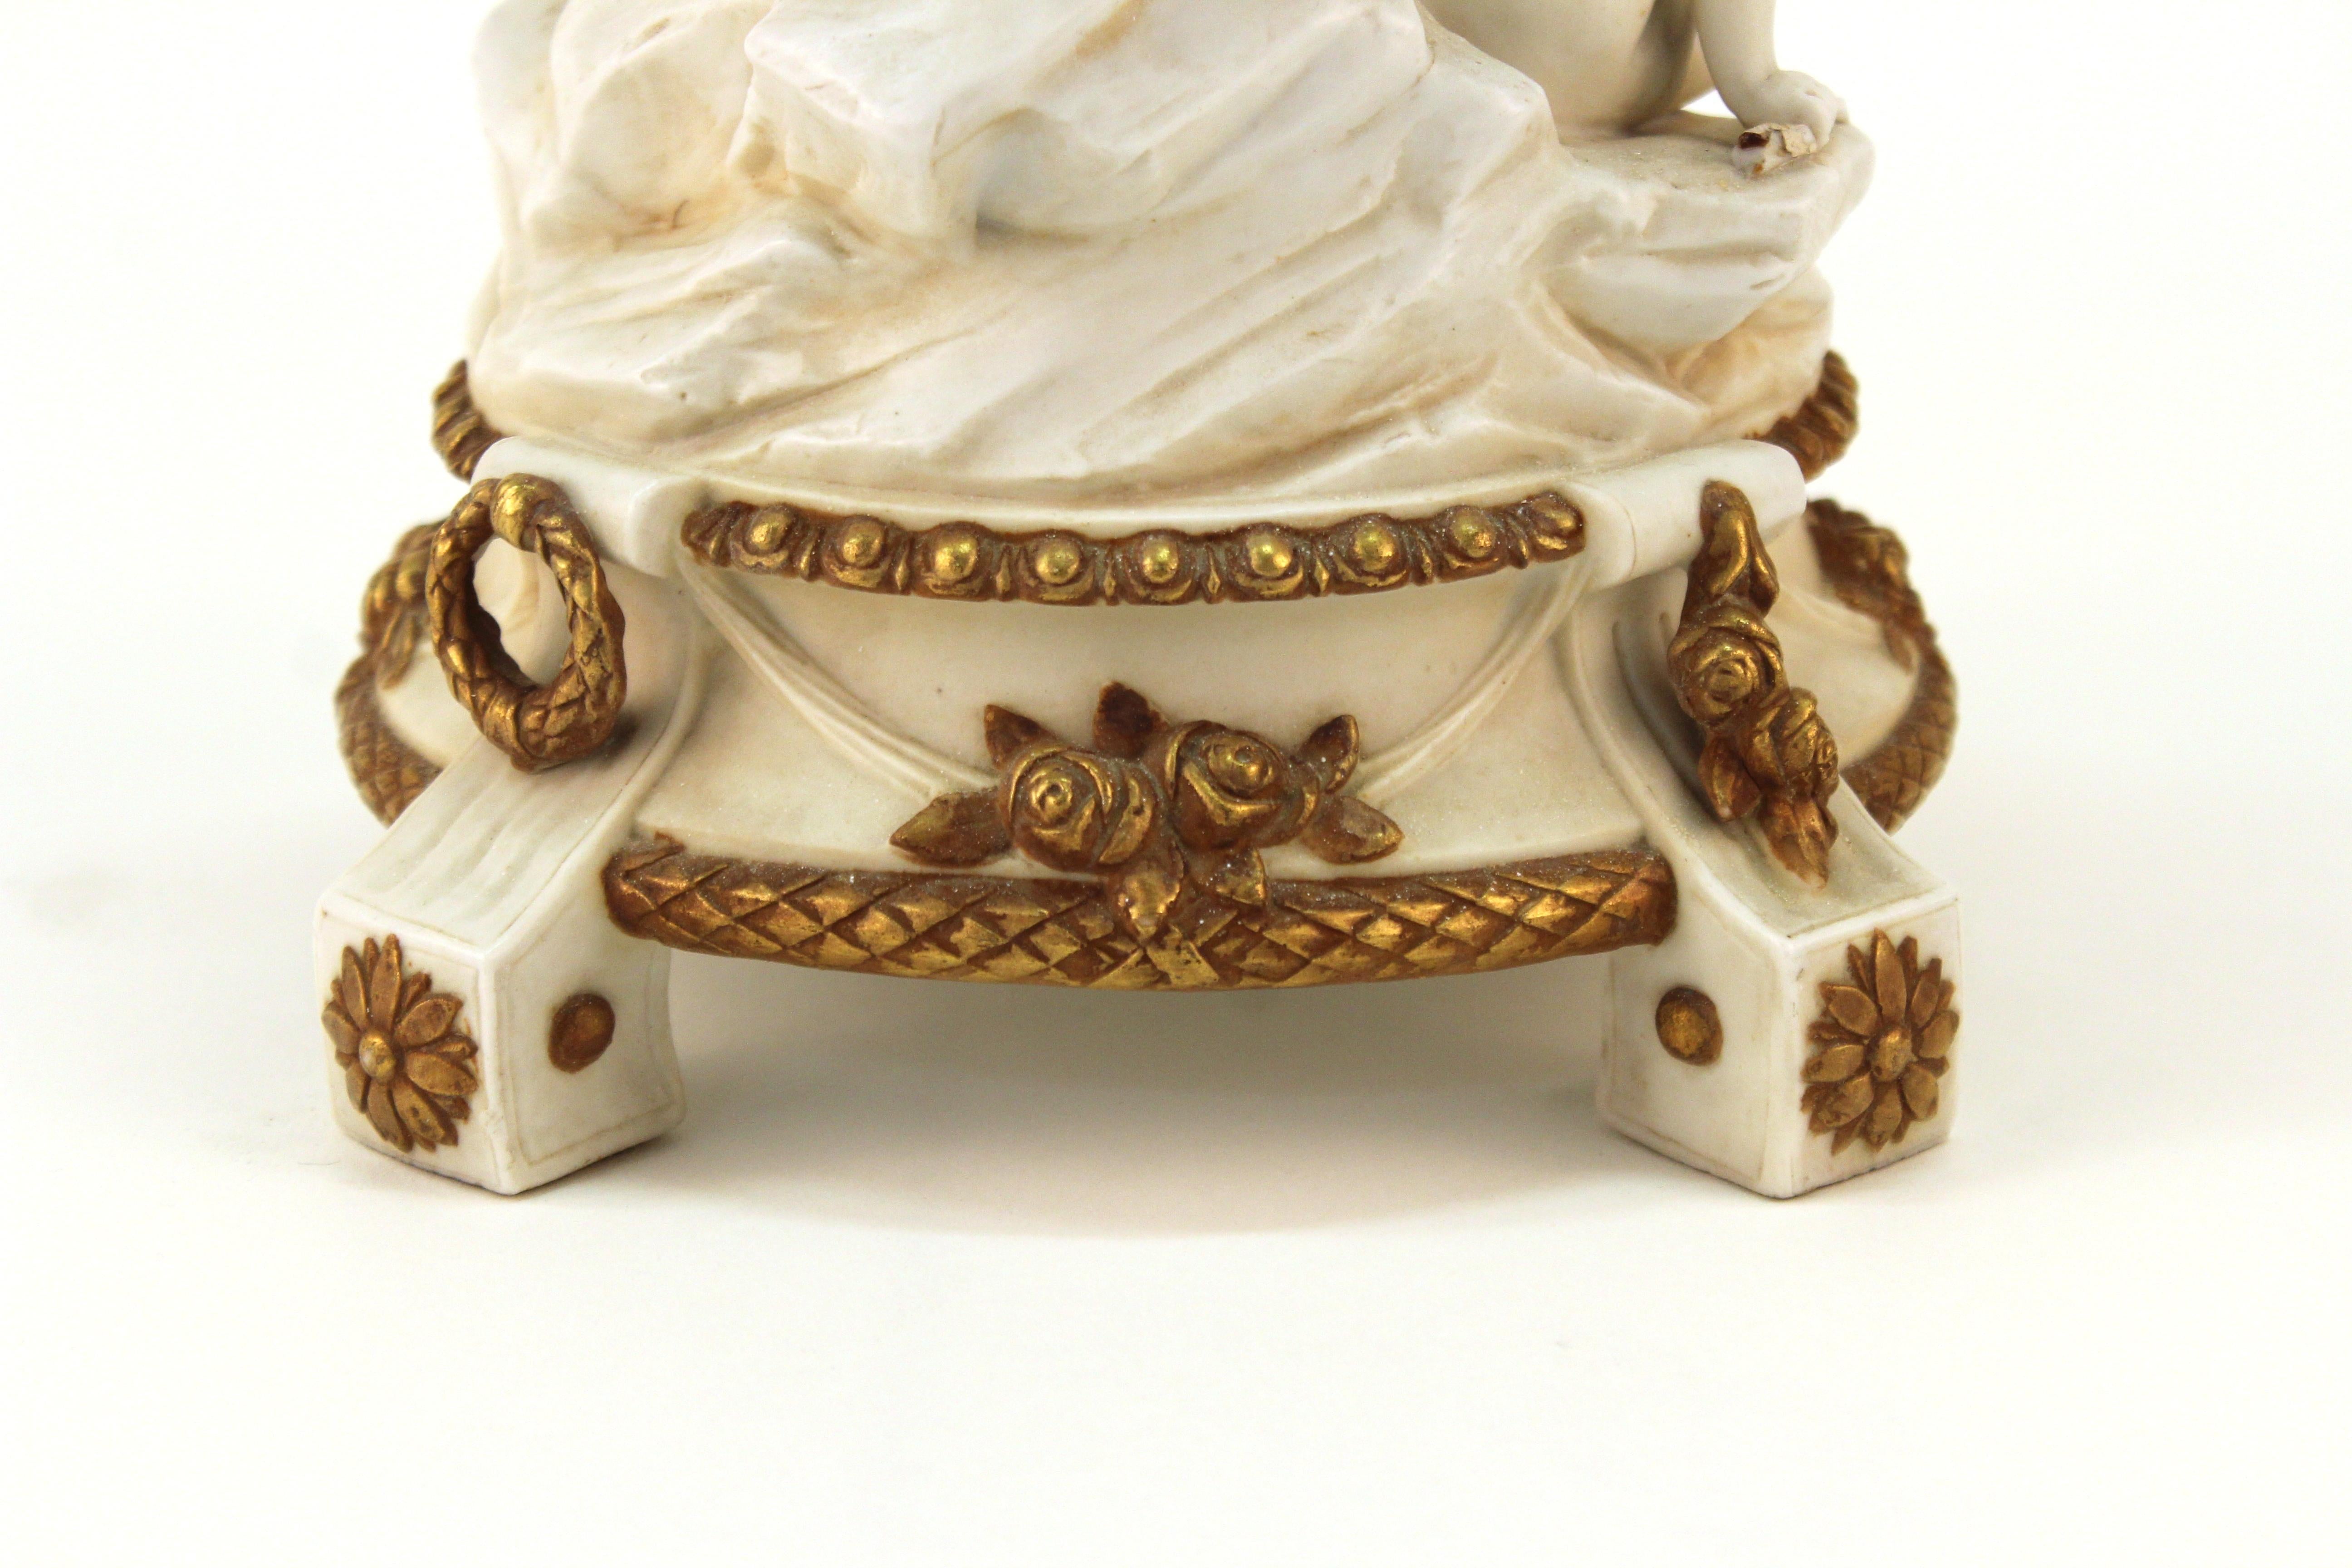 Neoclassical Revival Italian Parianware Seated Venus with Cherubs Sculpture